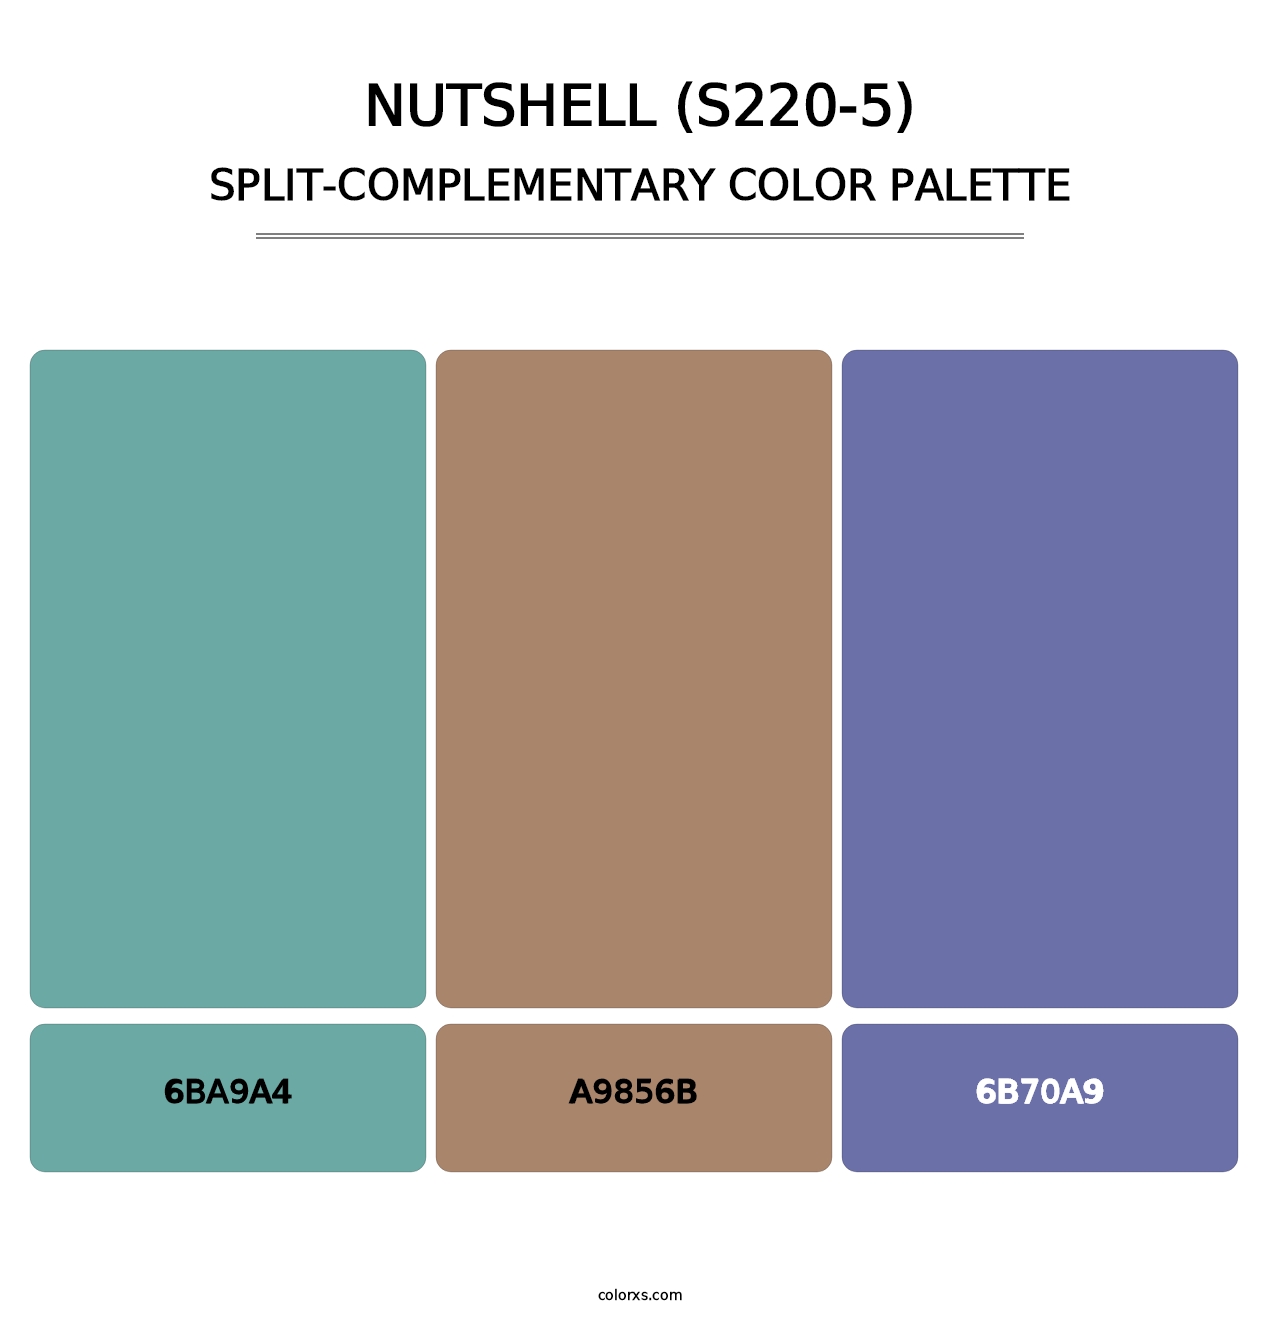 Nutshell (S220-5) - Split-Complementary Color Palette